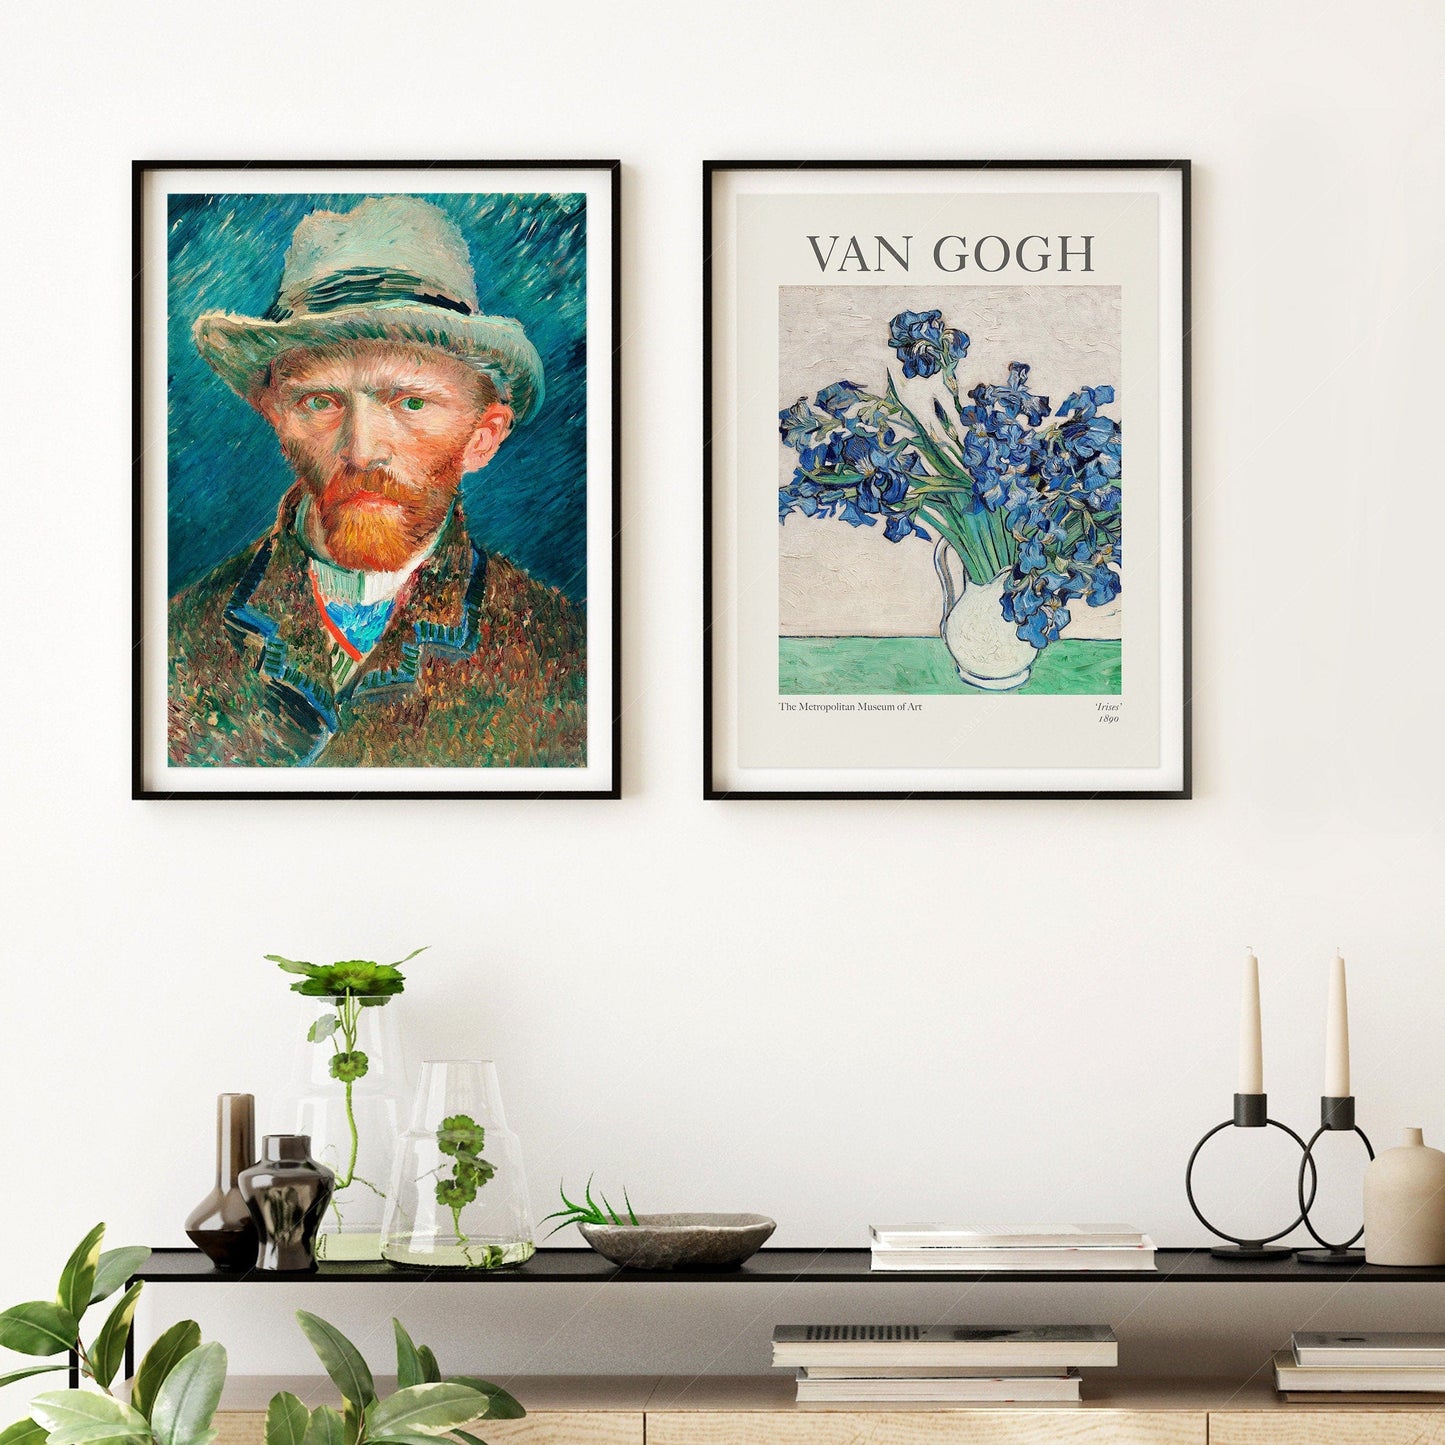 Home Poster Decor Set of 2 Van Gogh print, Set of 2 Wall Art, Van Gogh Flower Van Gogh Self Portrait, Living Wall Decor, Gift Idea, Office Wall Decor, Van Gogh Irises